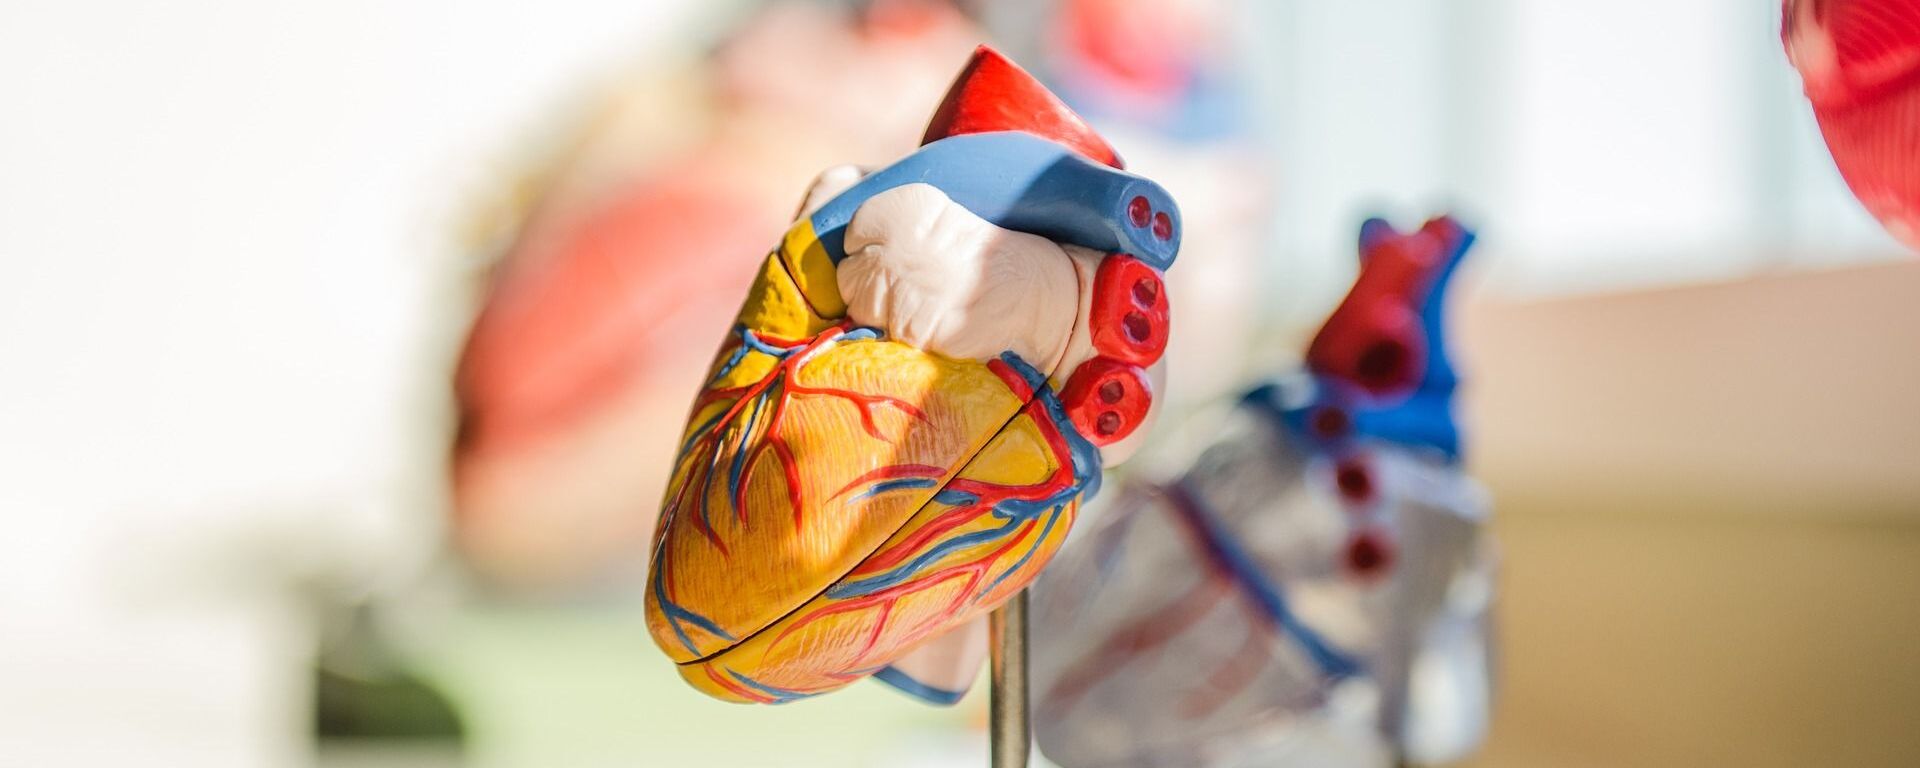 Modelo anatómico de un corazón. Imagen referencial - Sputnik Mundo, 1920, 13.02.2021